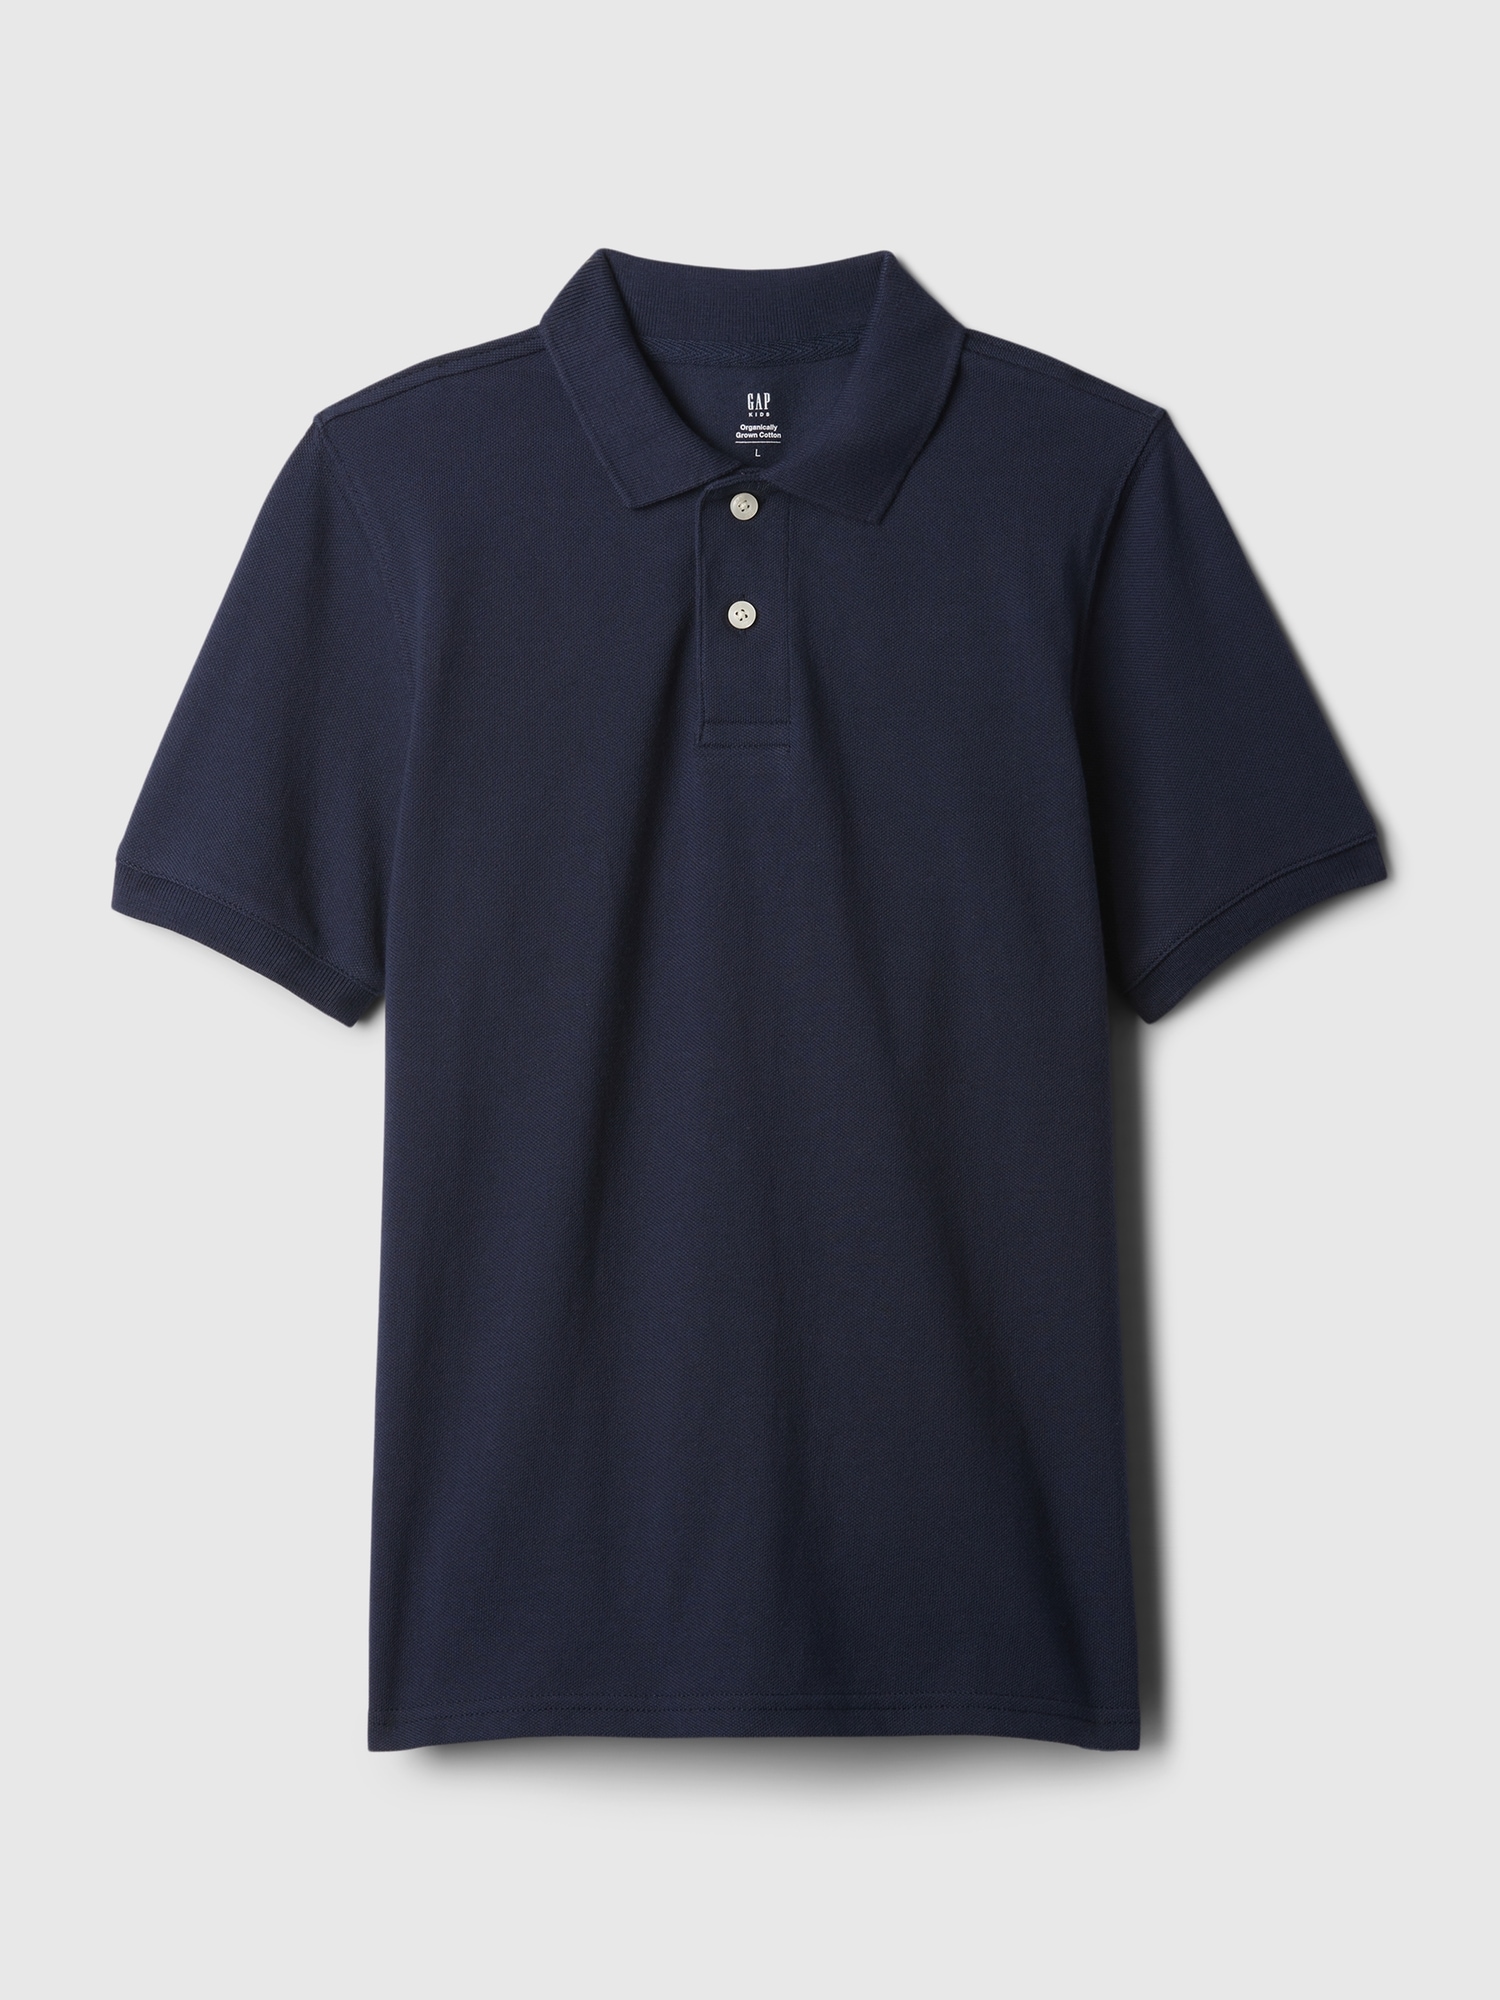 Kids Organic Cotton Uniform Polo Shirt | Gap